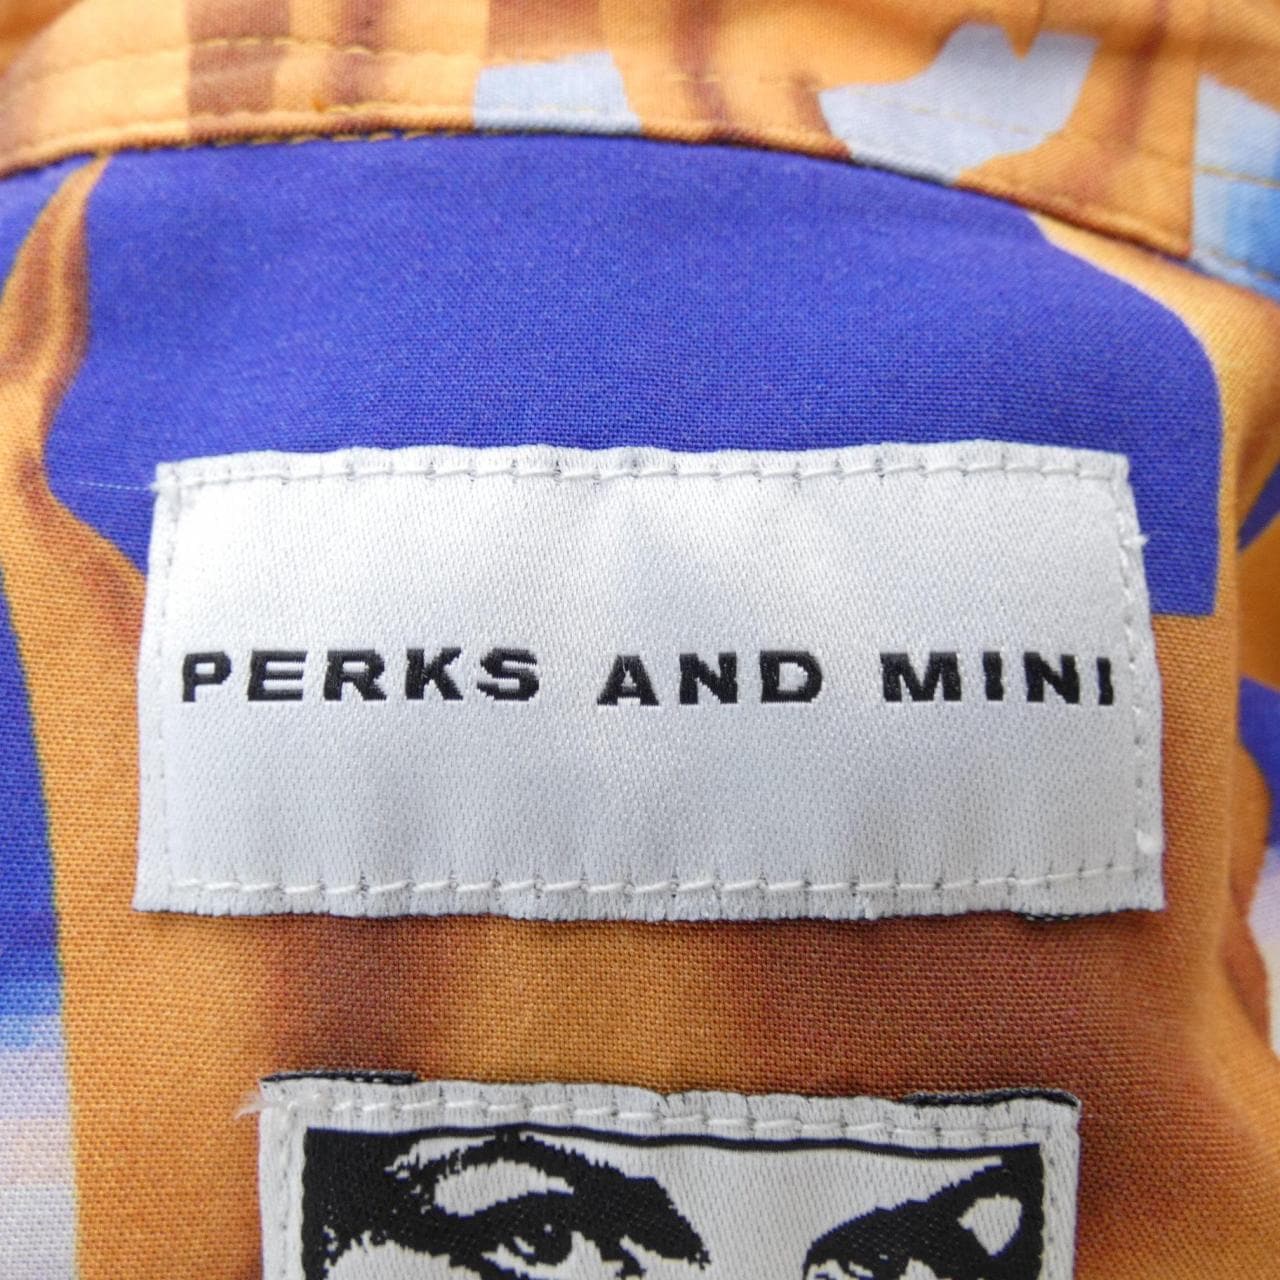 PEAKS AND MINI S/S shirt